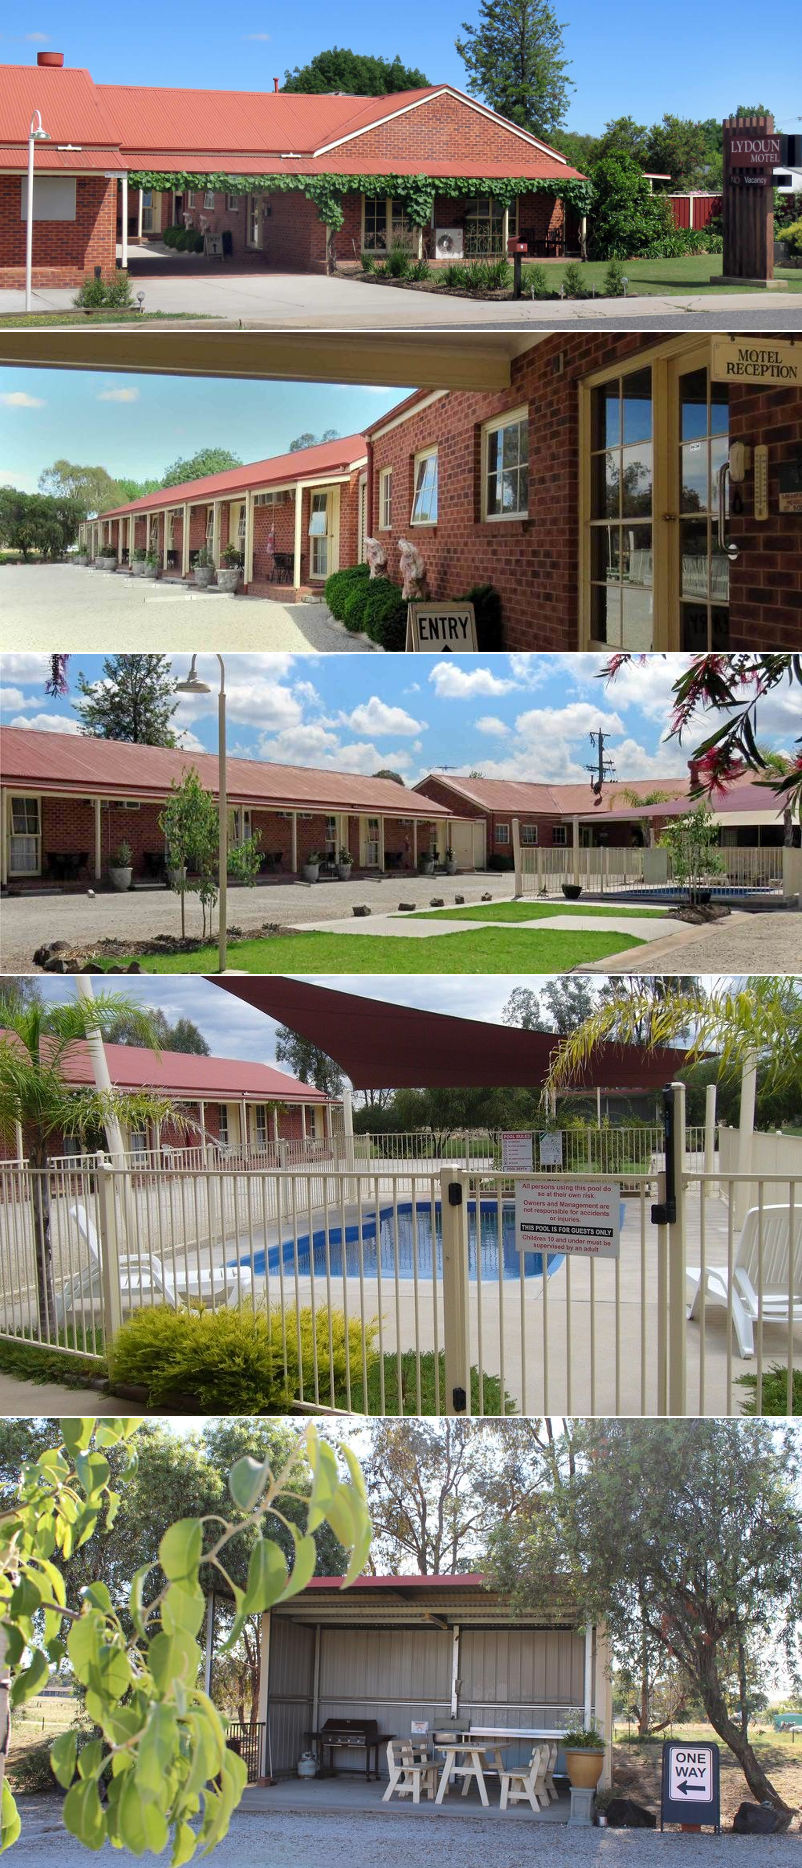 Lydoun Motel - Grounds and facilities